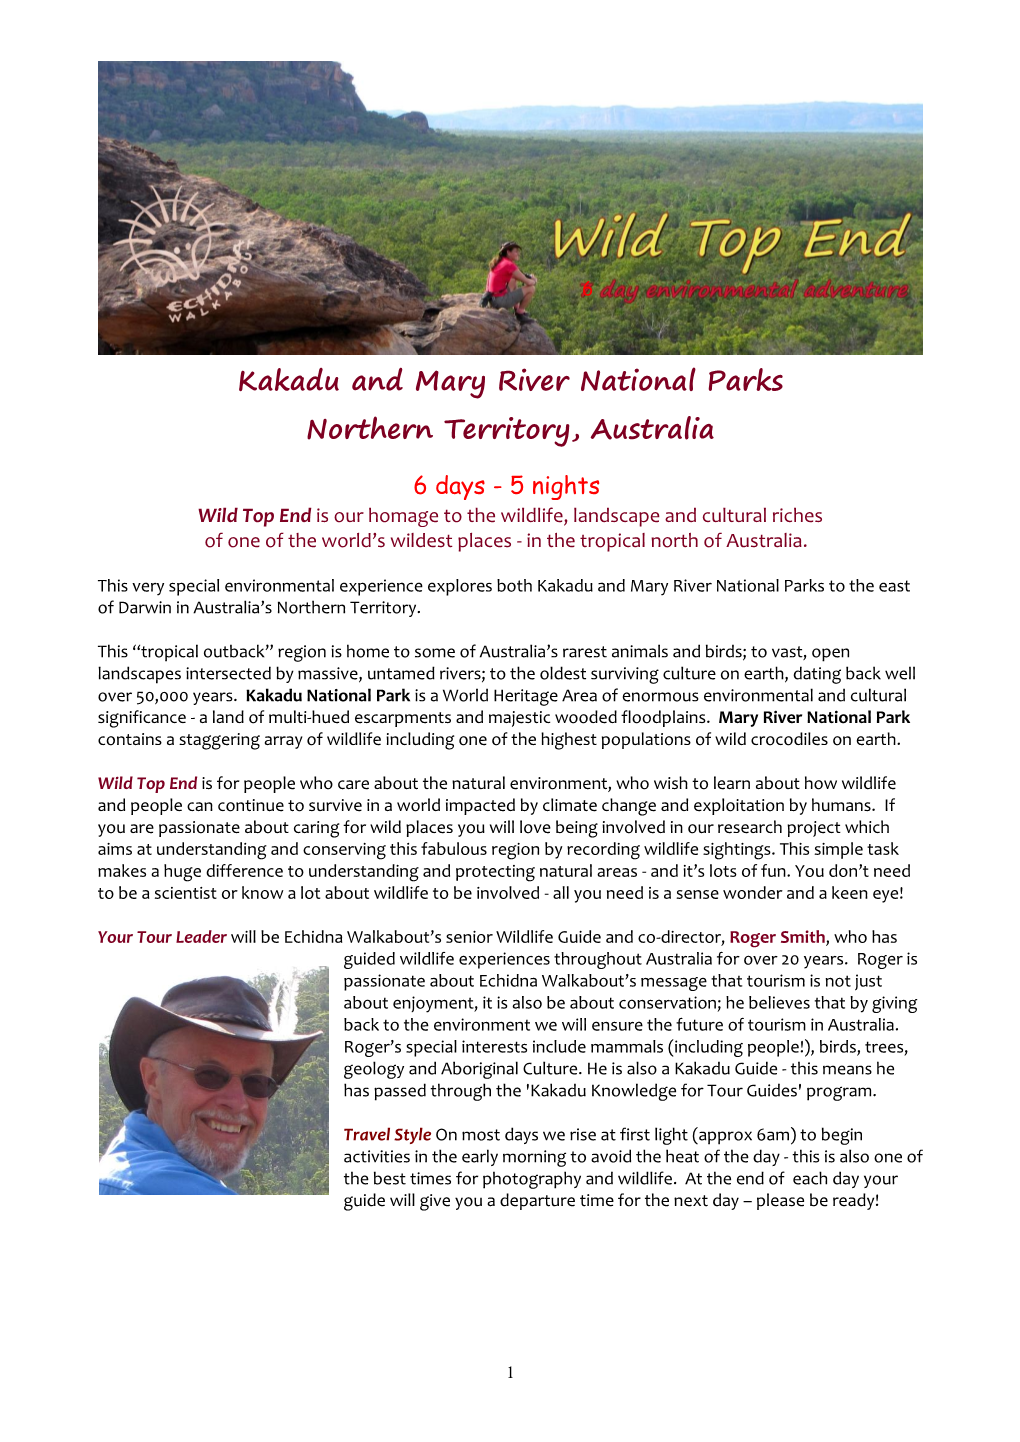 Kakadu and Mary River National Parks Northern Territory, Australia